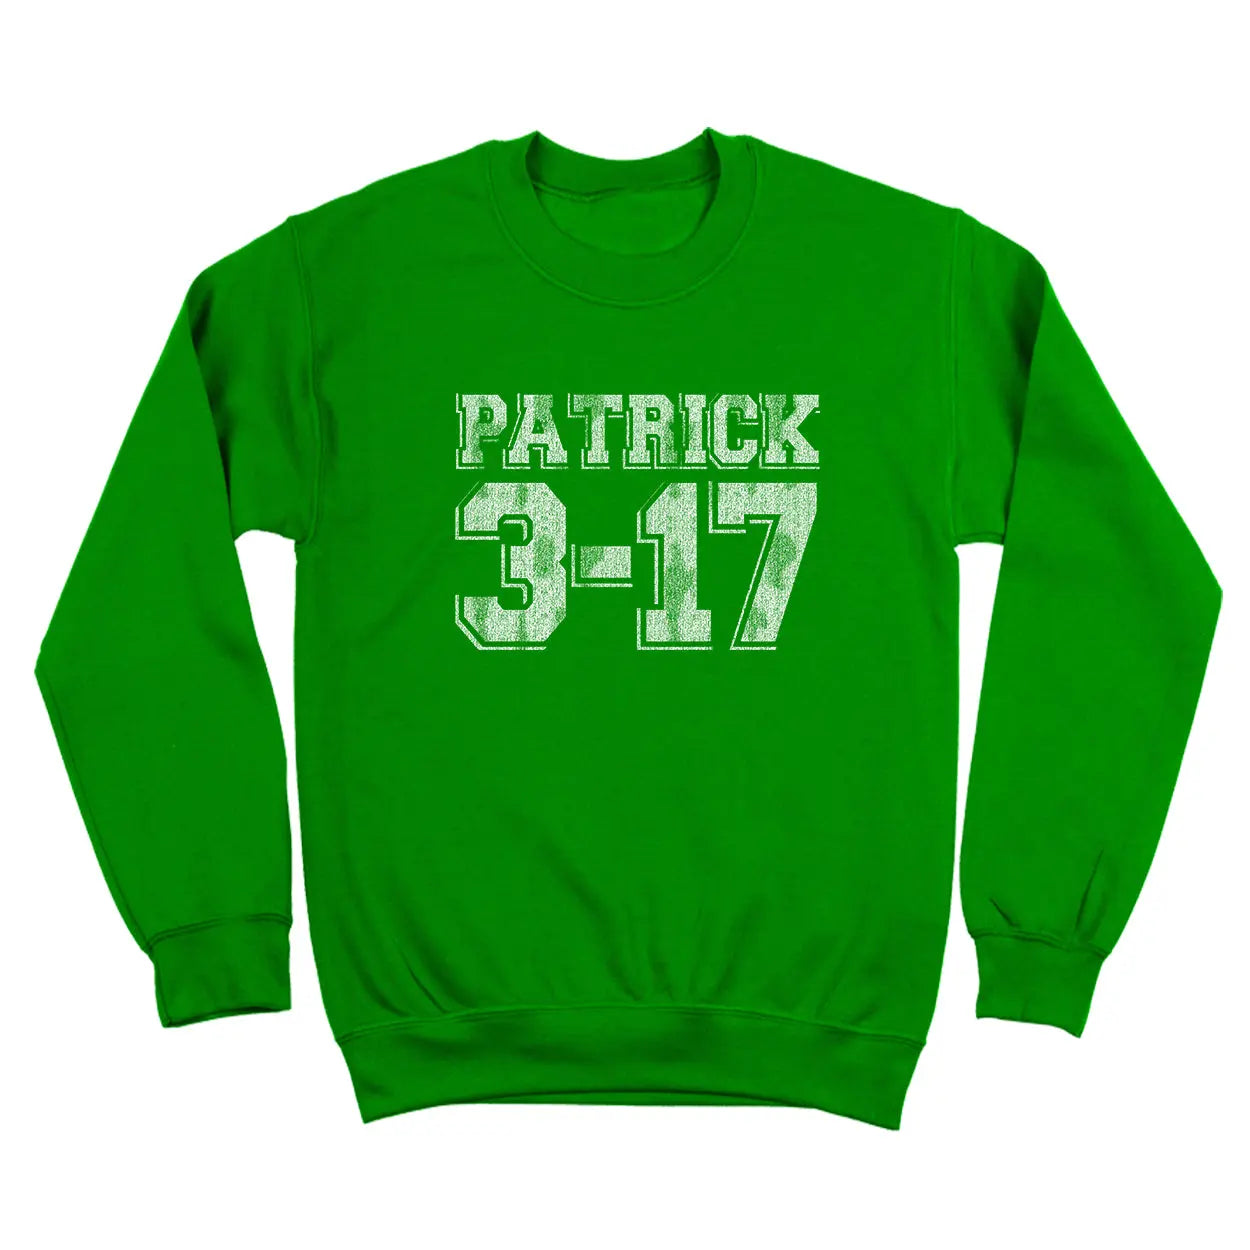 Patrick 3-17 Tshirt - Donkey Tees